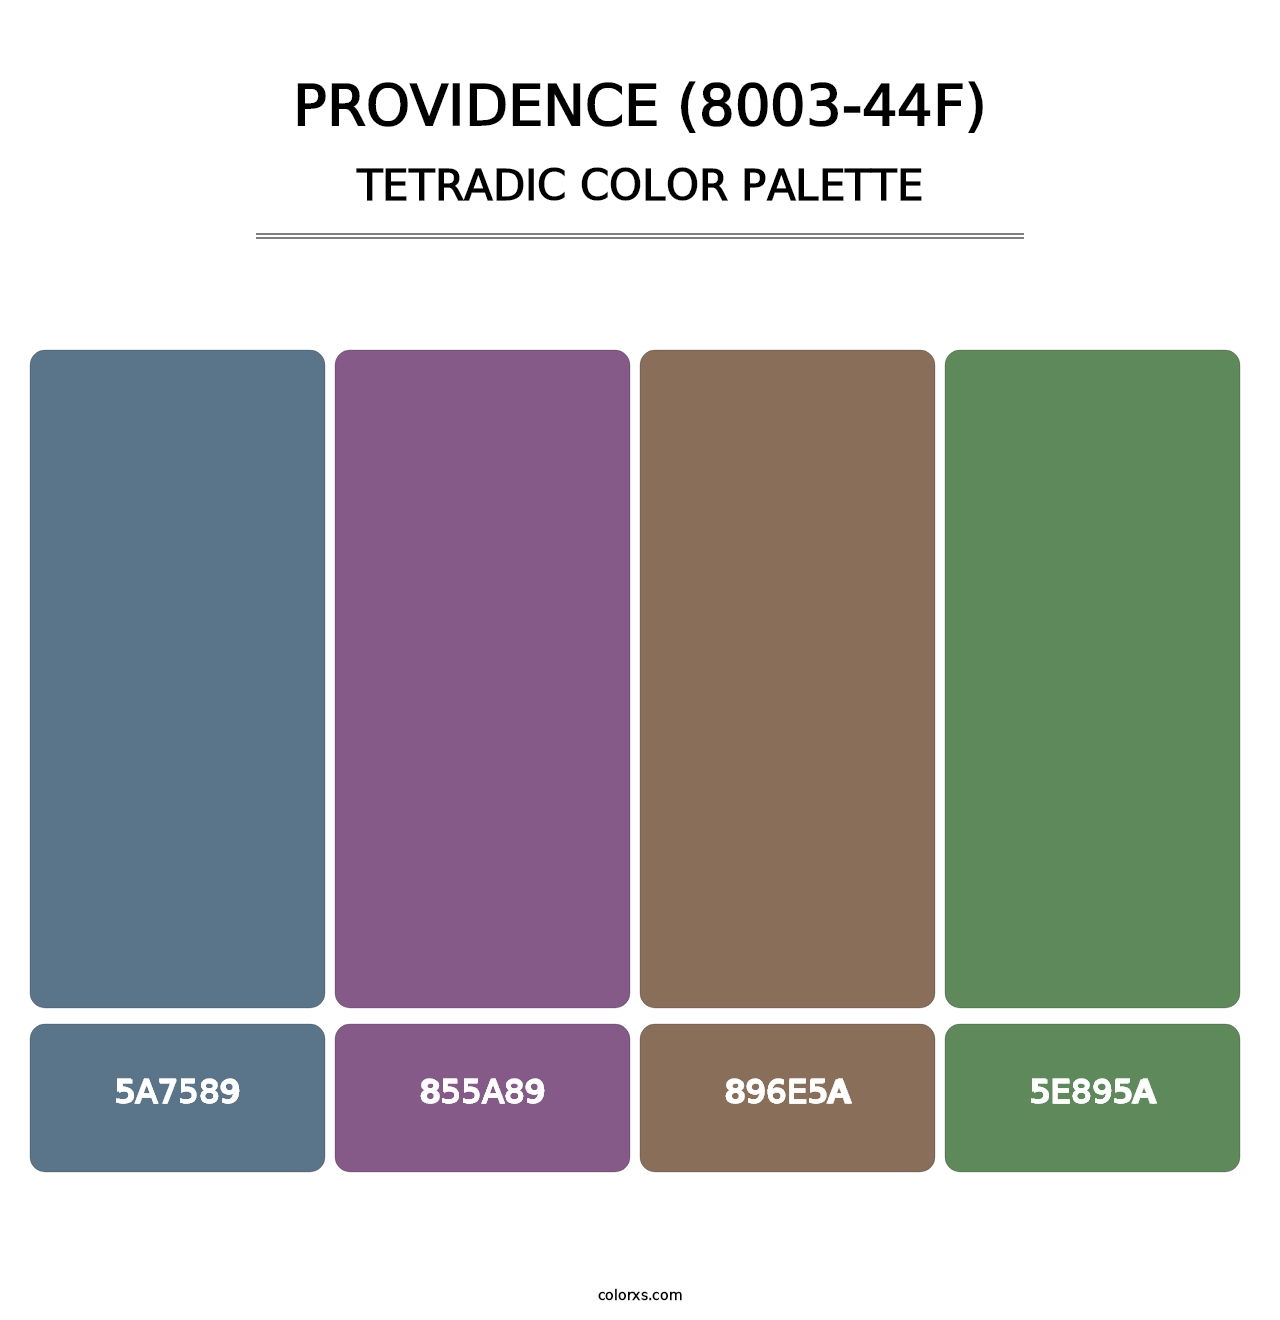 Providence (8003-44F) - Tetradic Color Palette